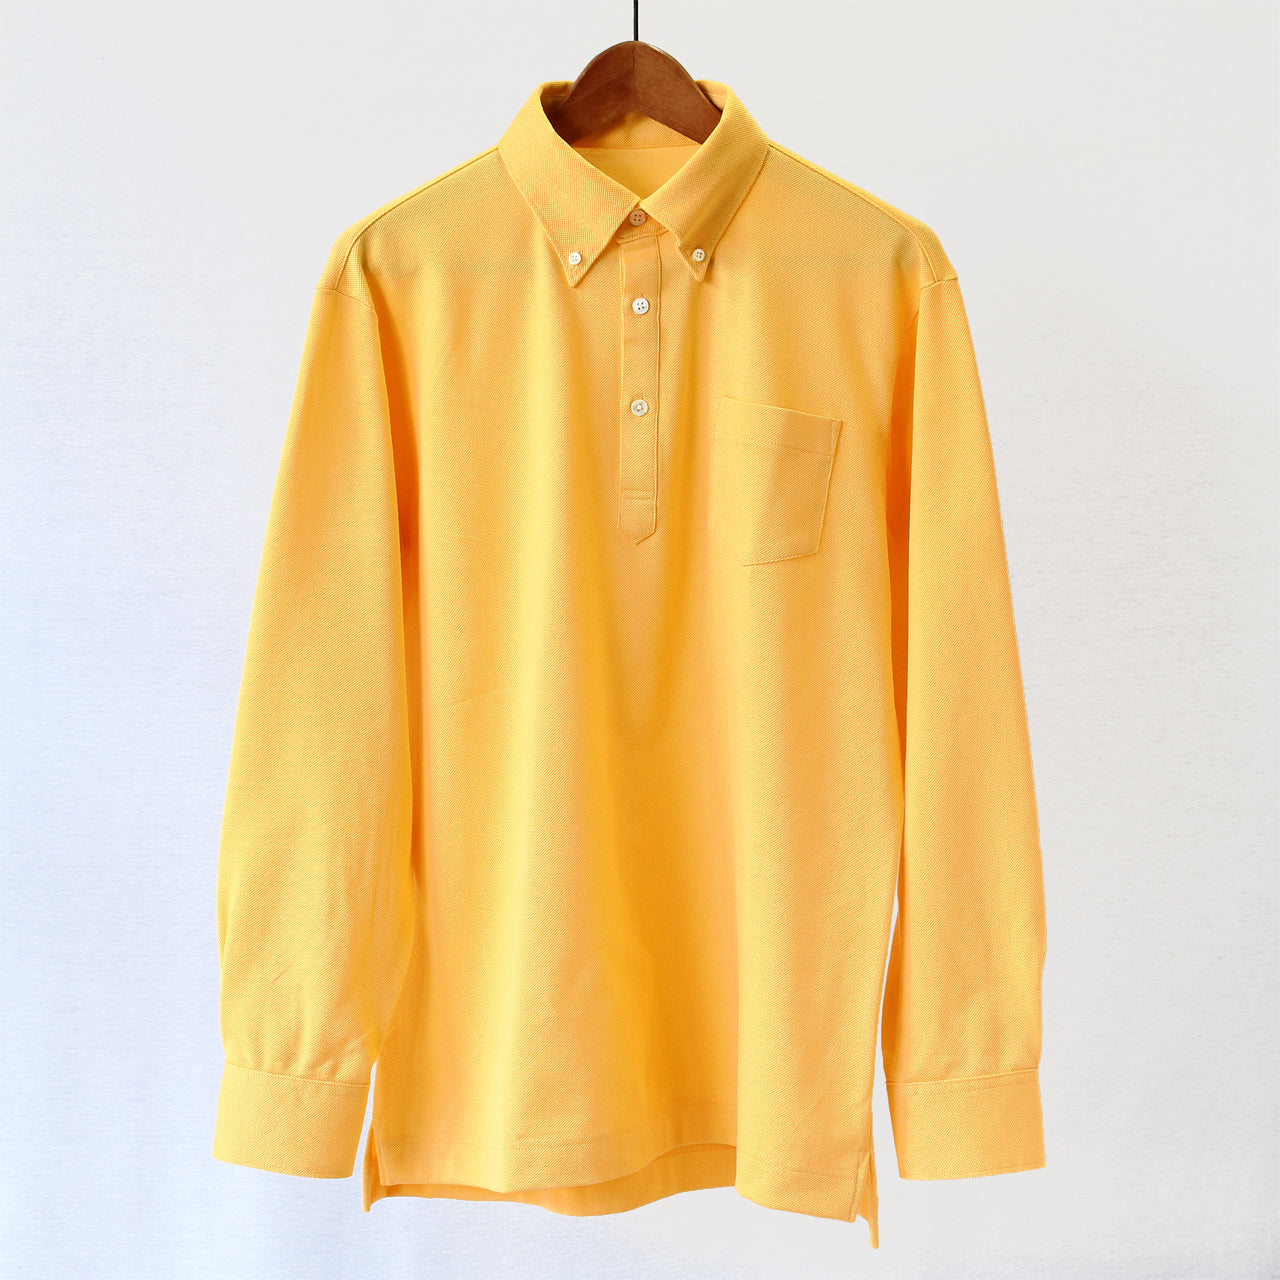 [480806] 32/2 Double Mercerized Supima Cotton Long Sleeve Pique Polo Shirt